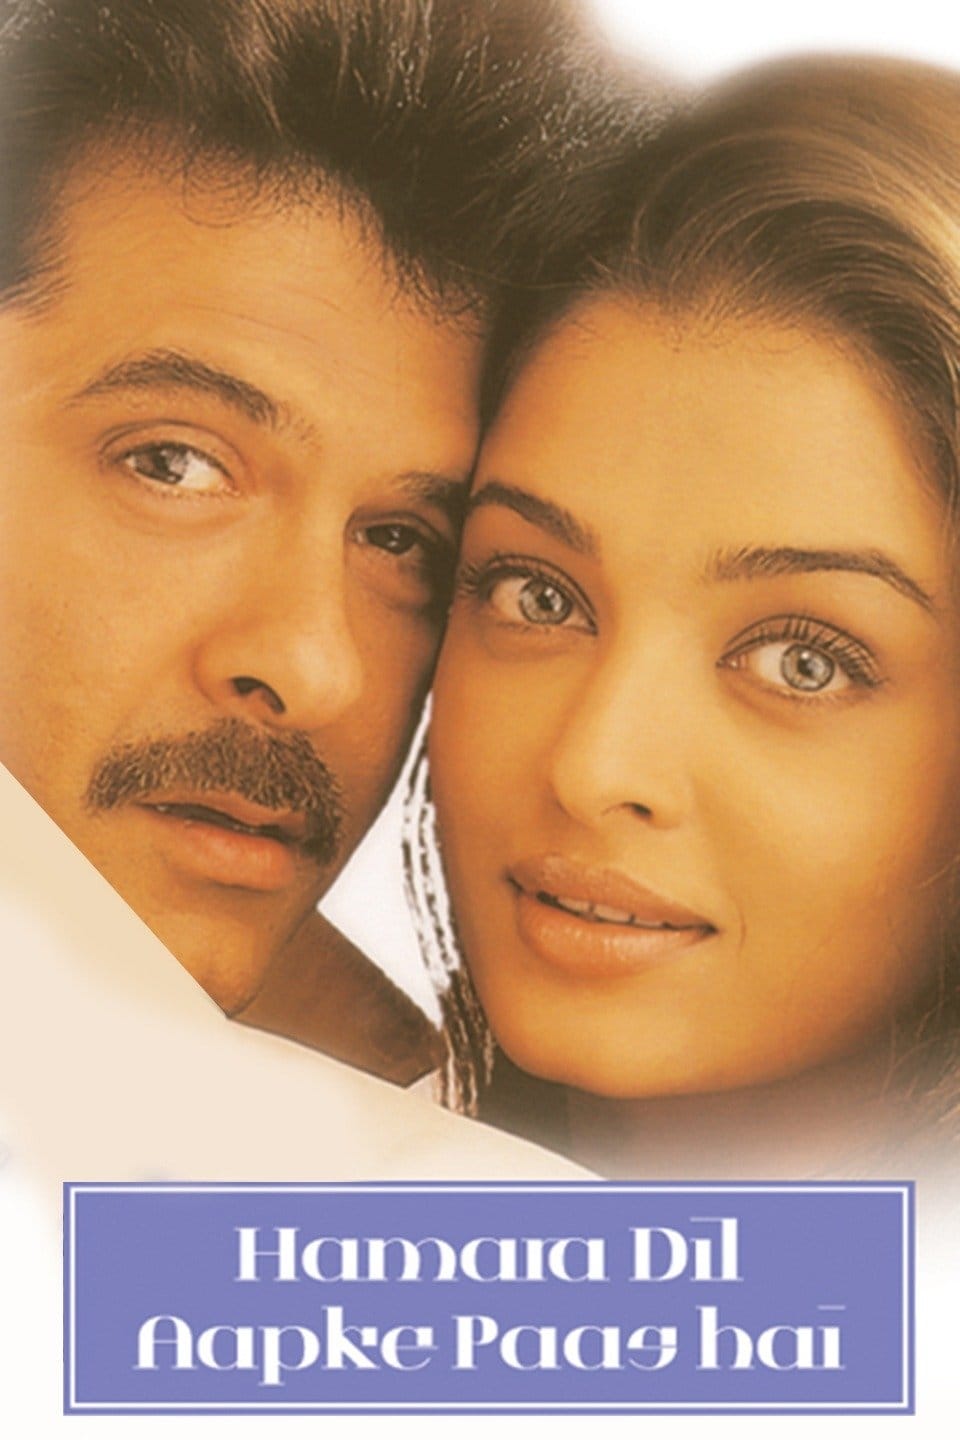 Poster for the movie "Hamara Dil Aapke Paas Hai"